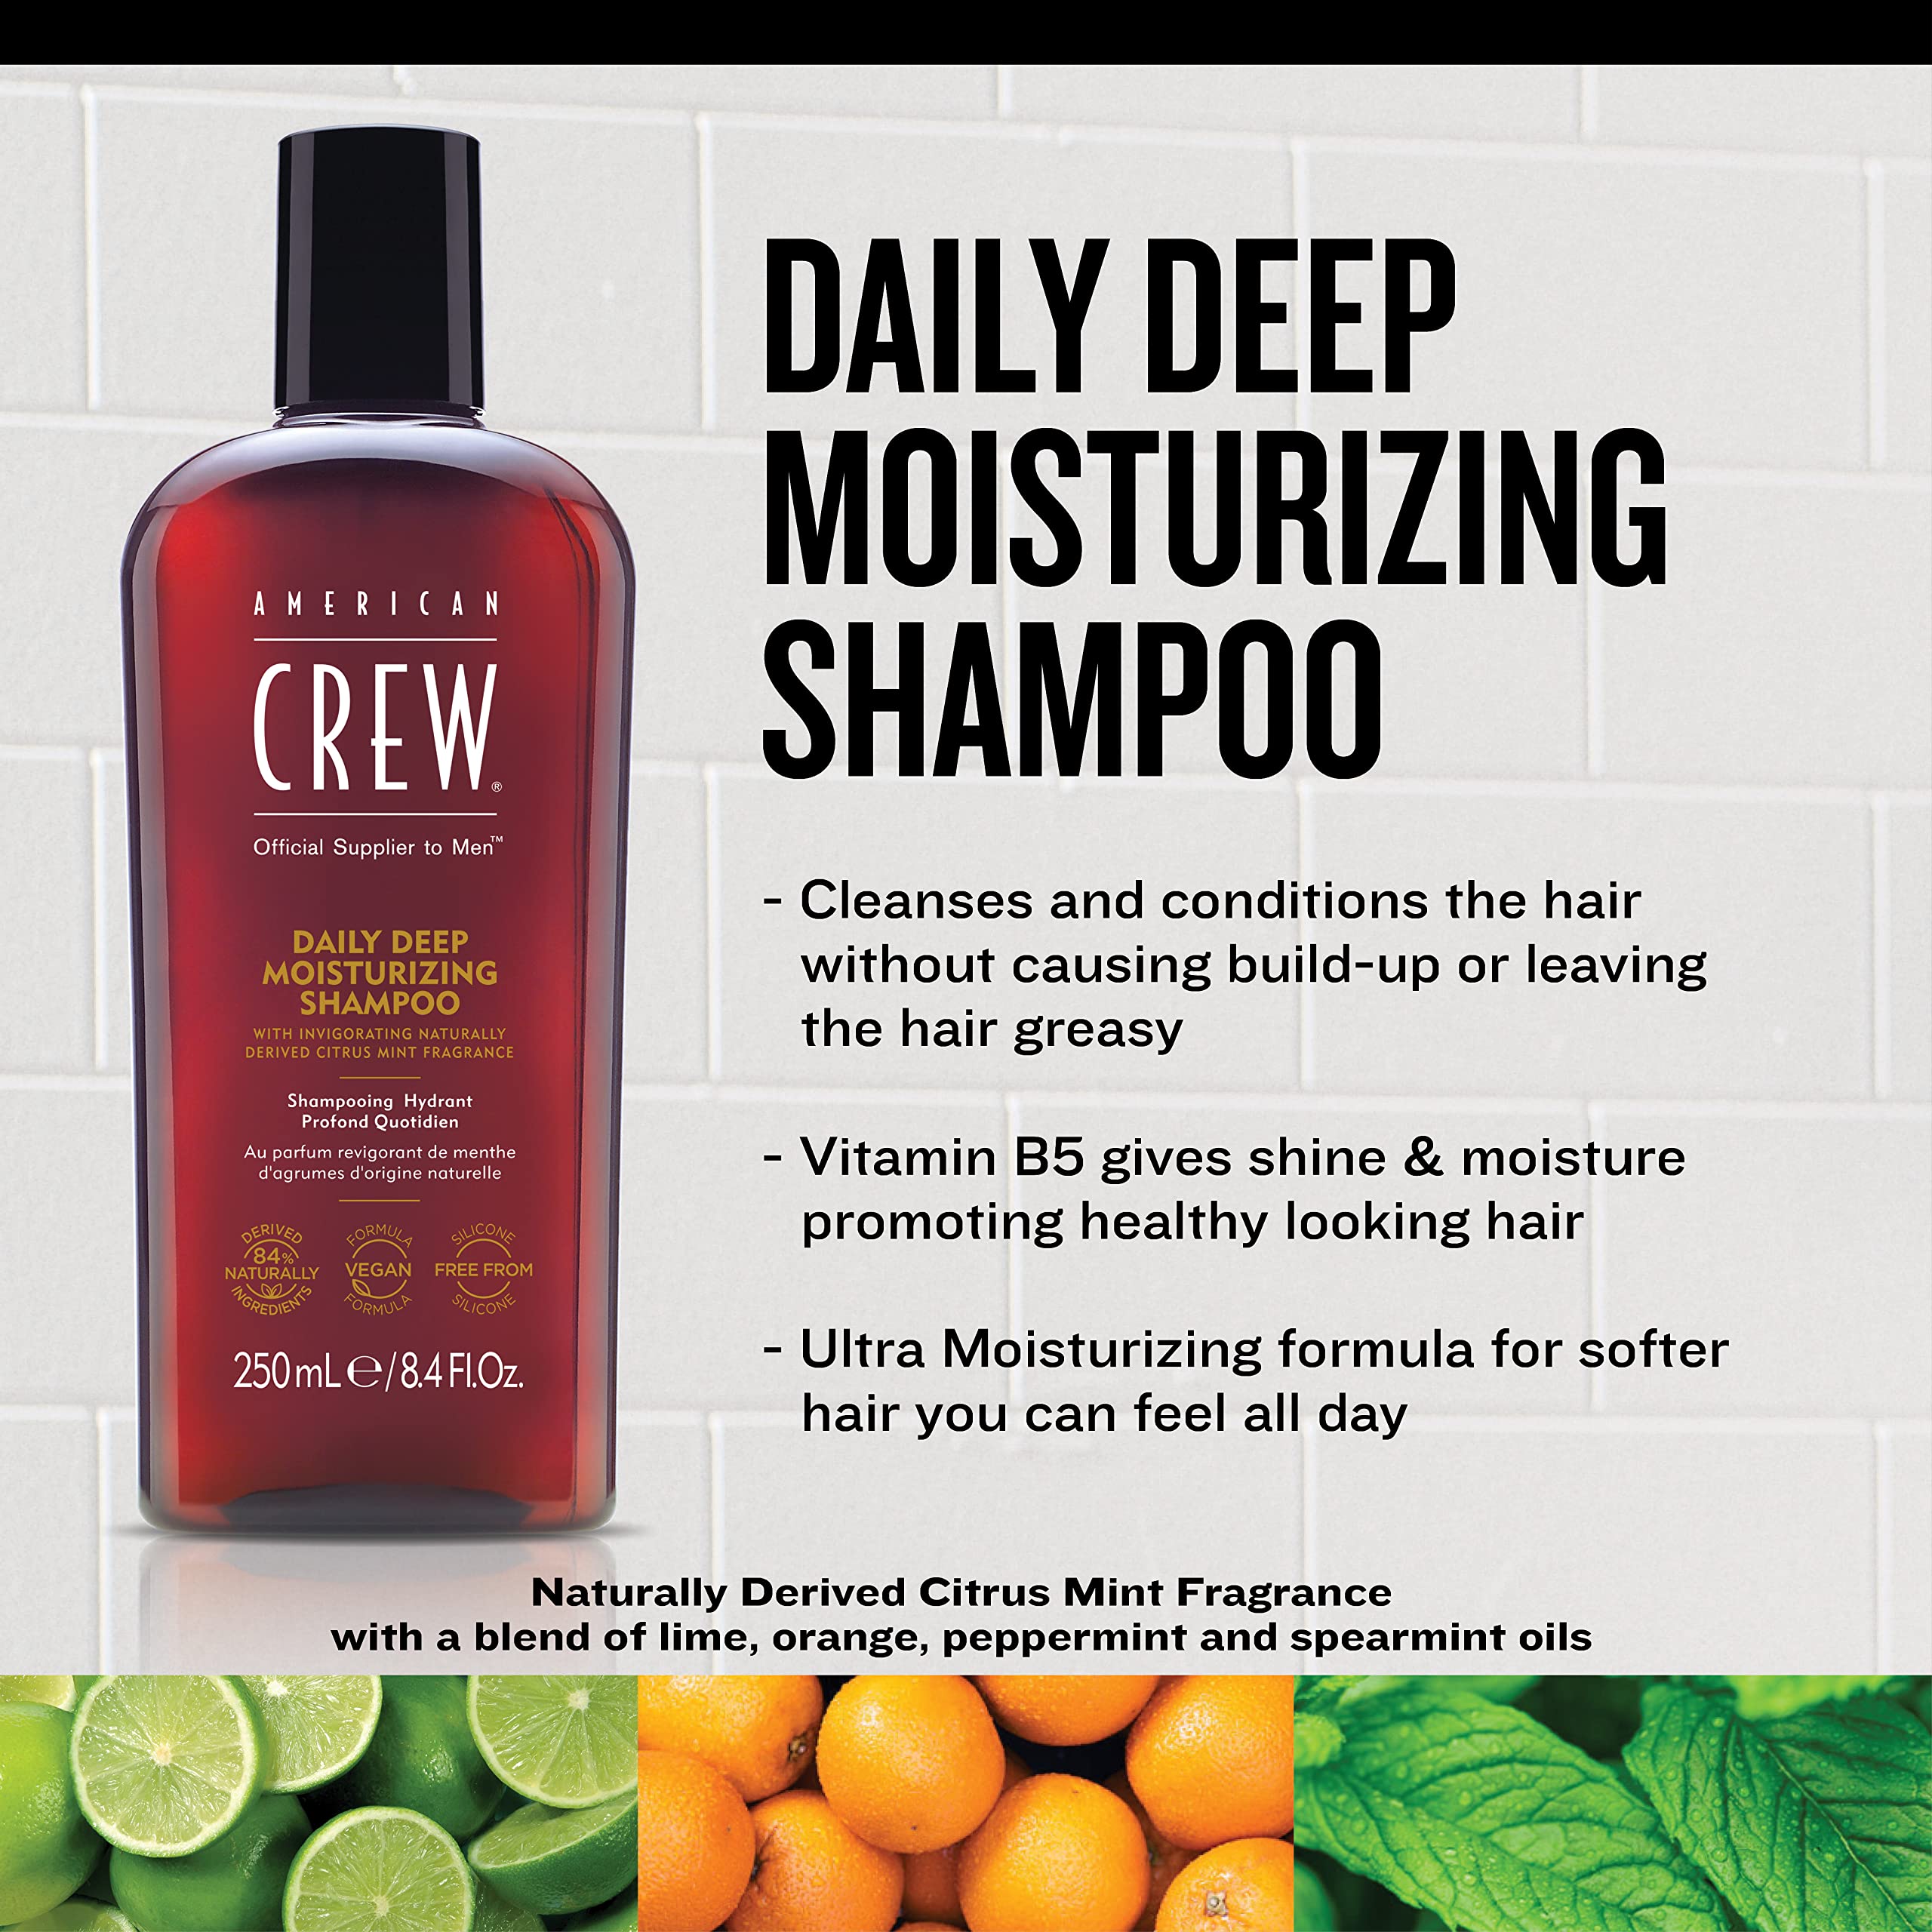 Shampoo for Men by American Crew, Daily Deep Moisturizer, Naturally Derived, Vegan Formula, Citrus Mint Fragrance, 15.2 Fl Oz